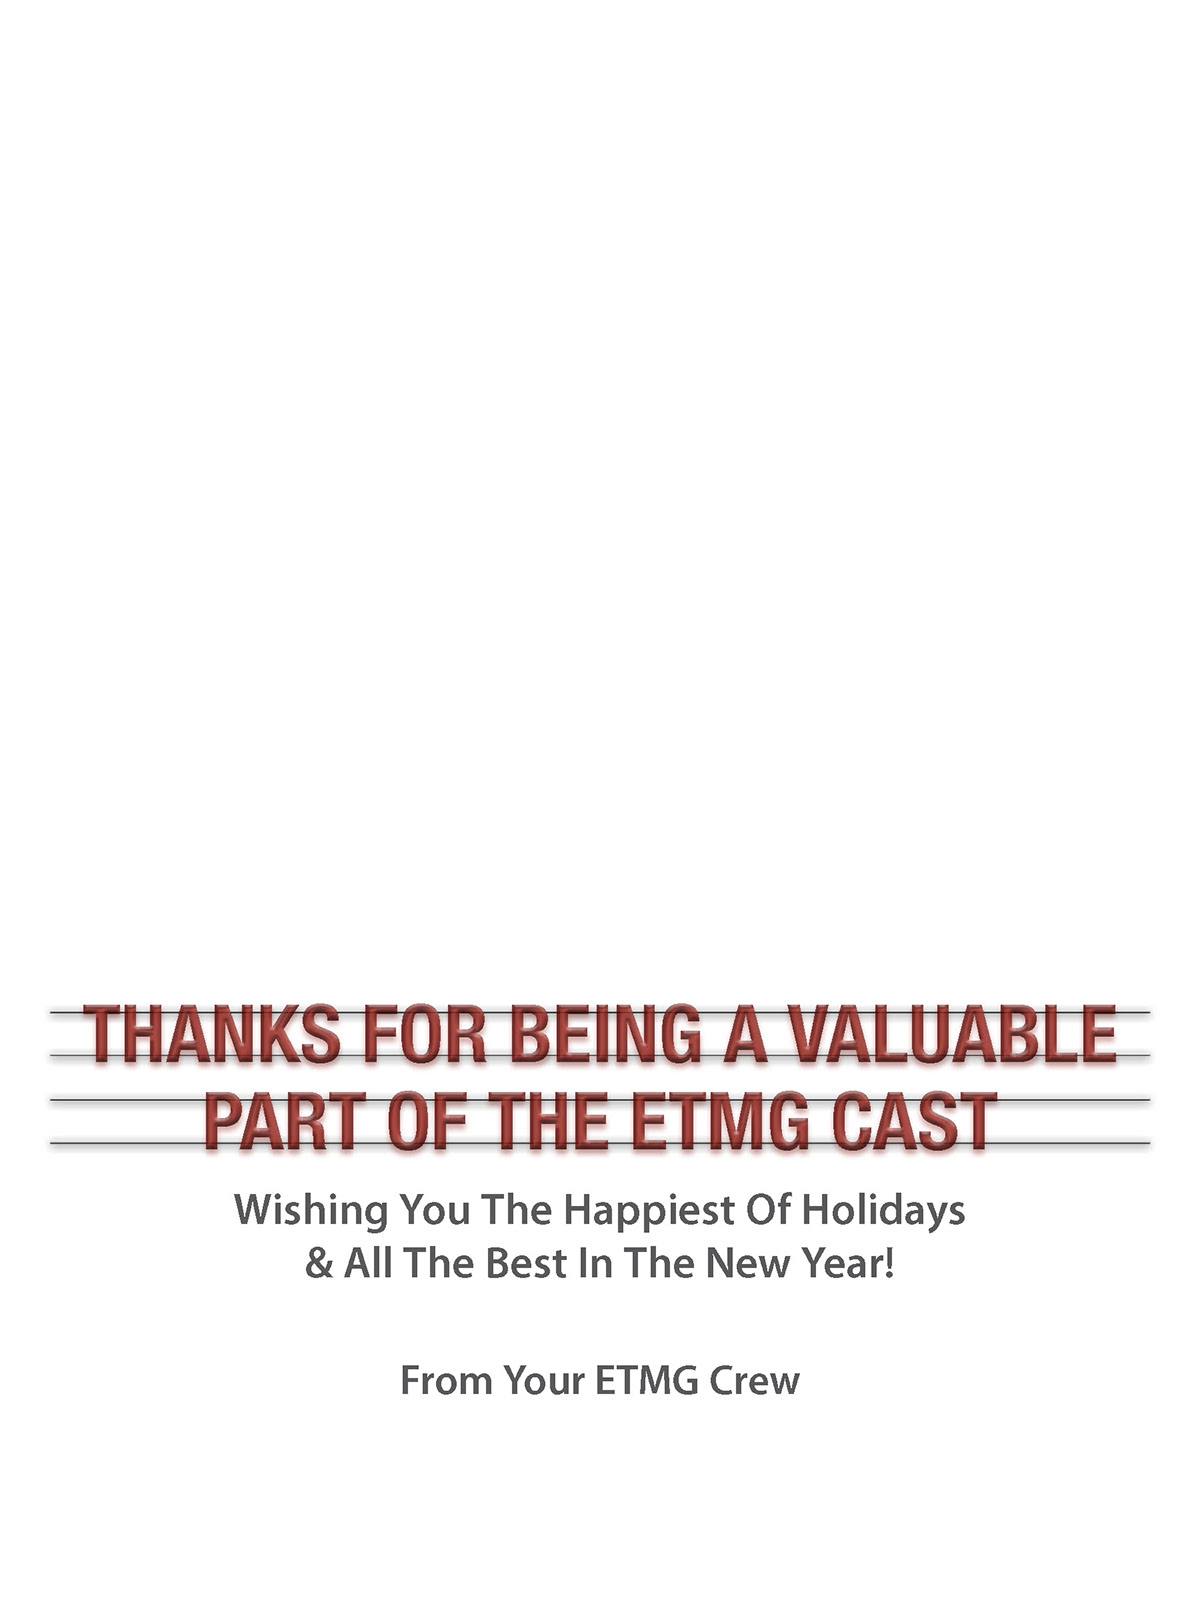 Holiday card thank you print design ETMG